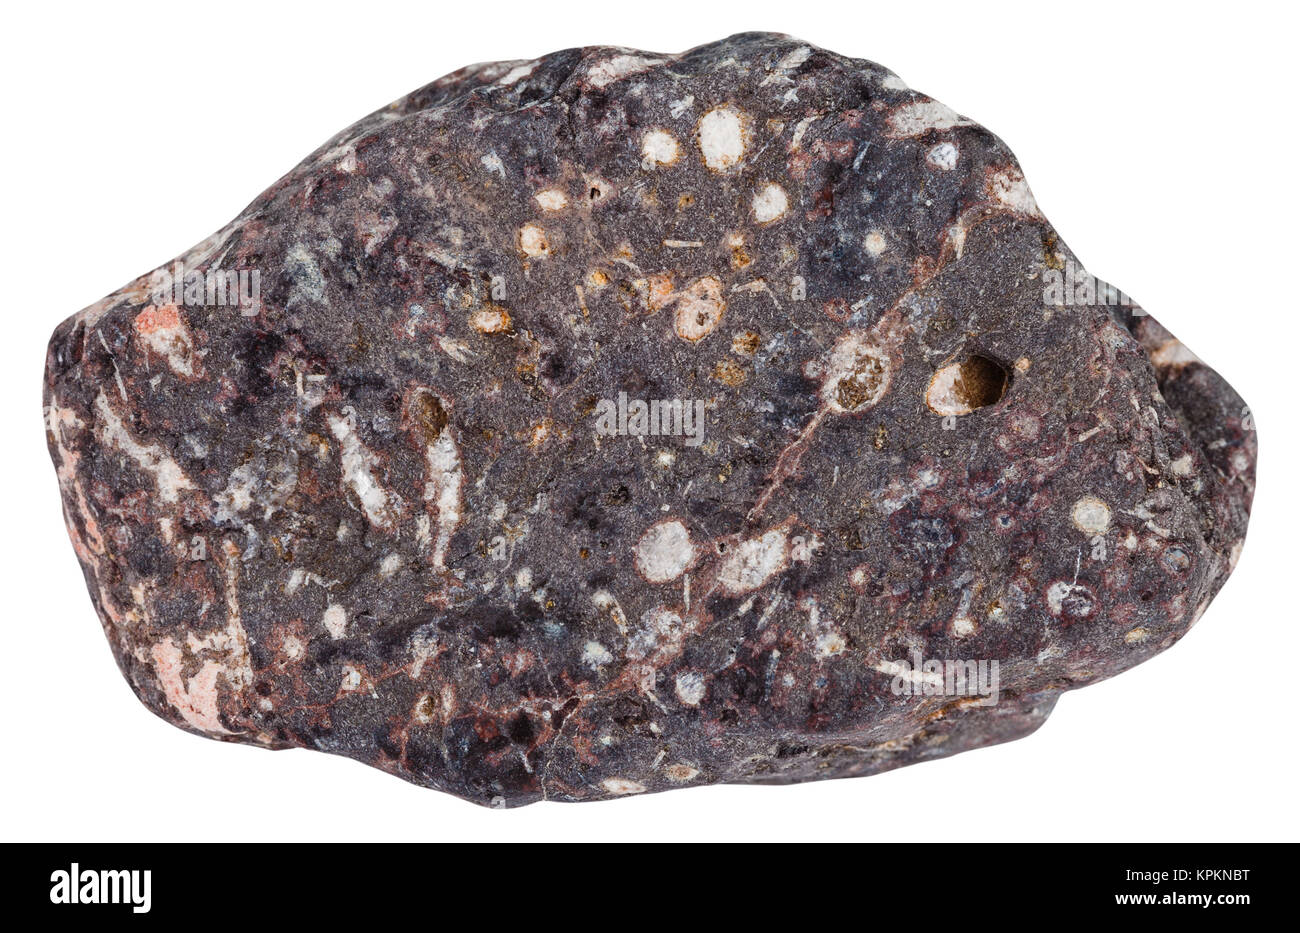 pebble of porous basalt mineral stone isolated Stock Photo